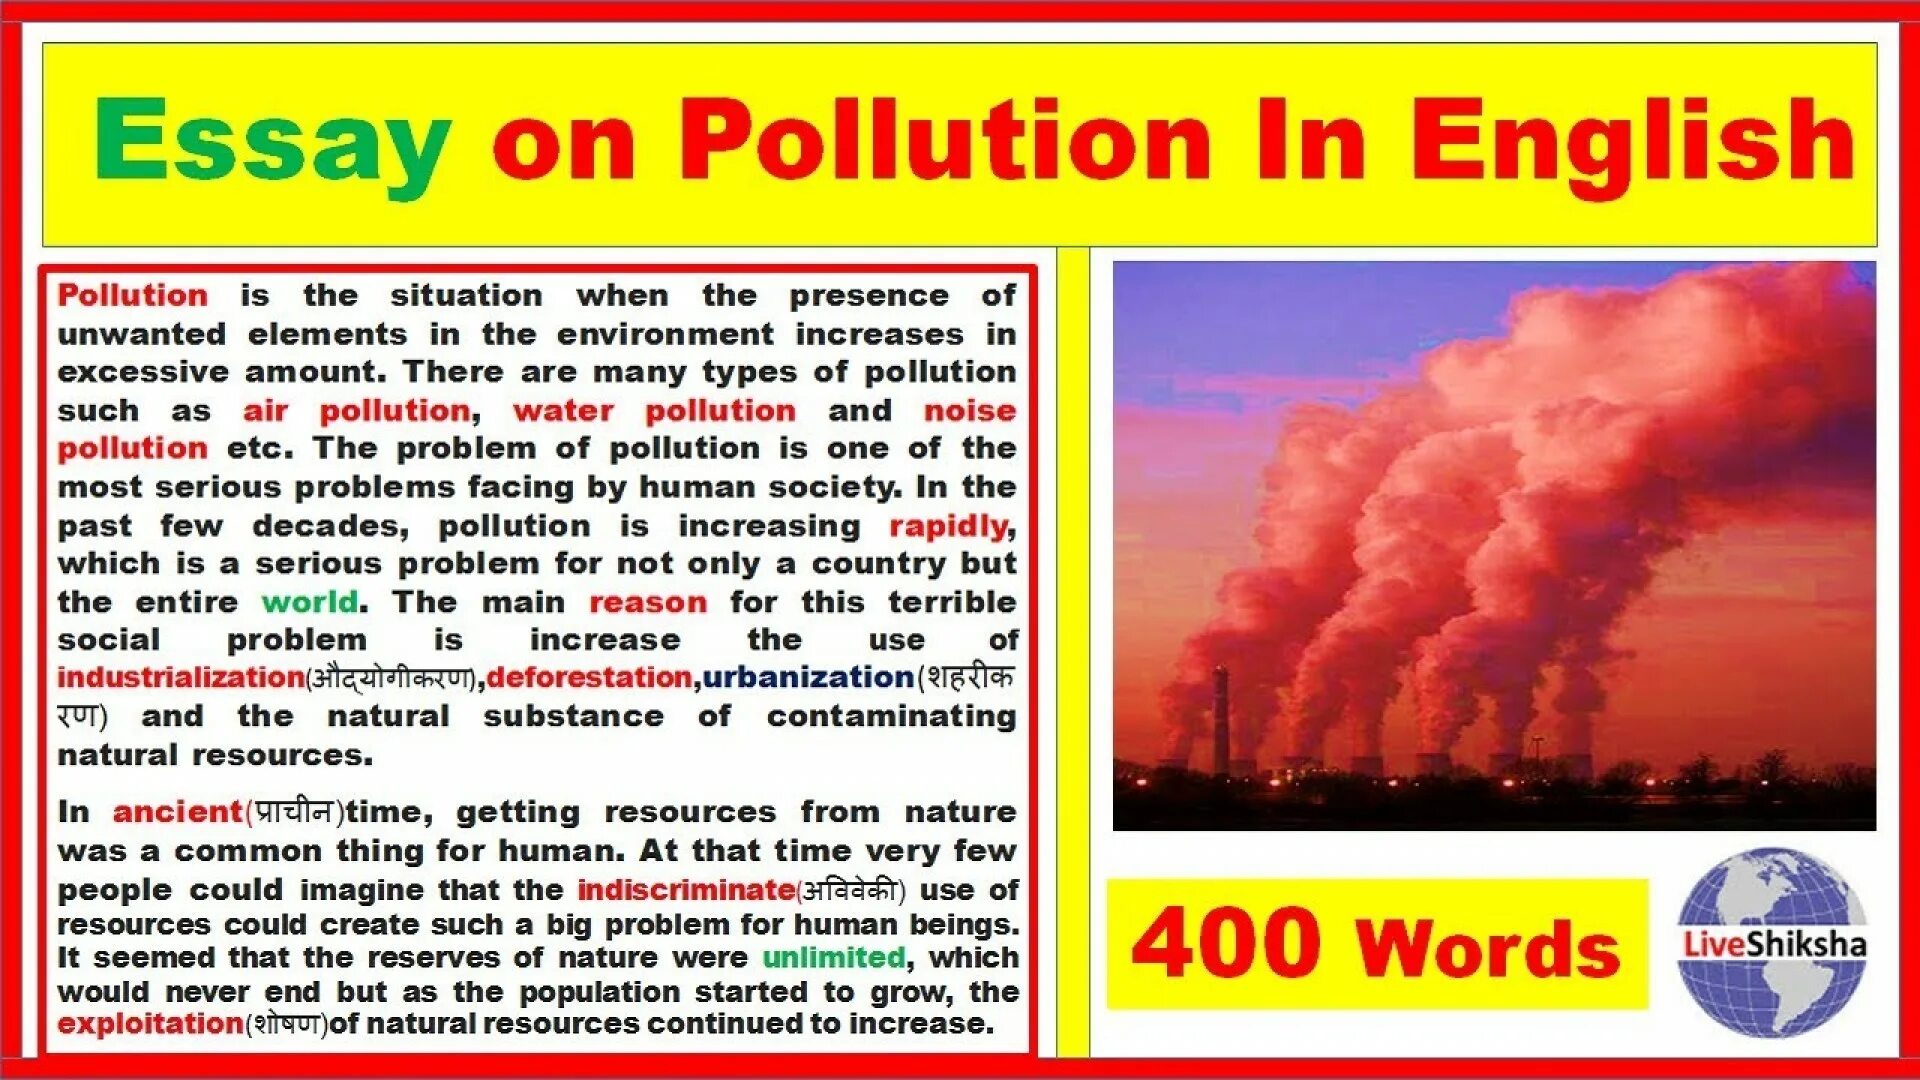 Pollution essay. Air pollution essay. Pollution of the environment эссе. Environmental problems essay.